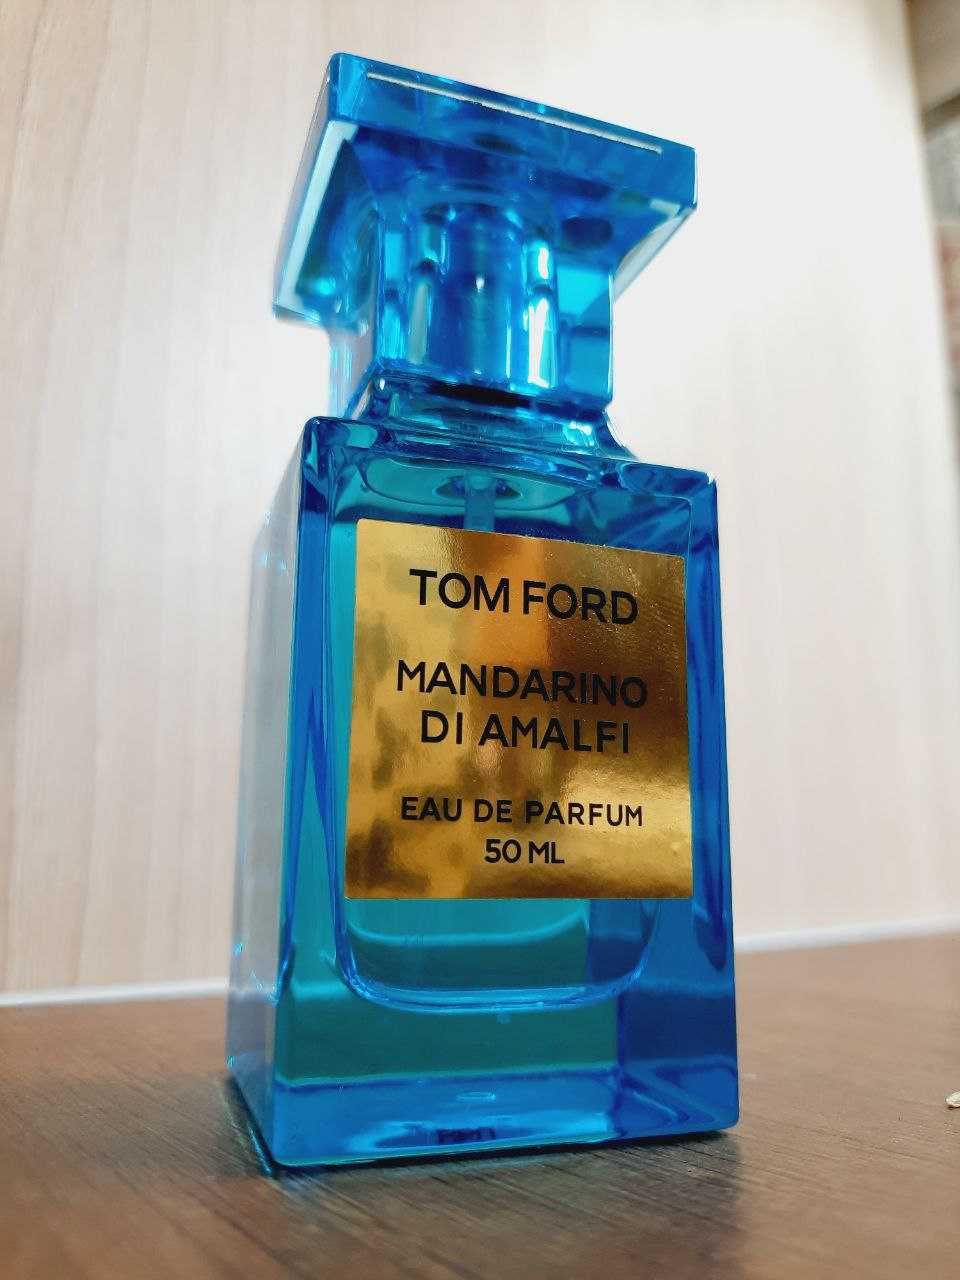 Tom Ford Mandarino di Amalfi 50 ml. Оригинал